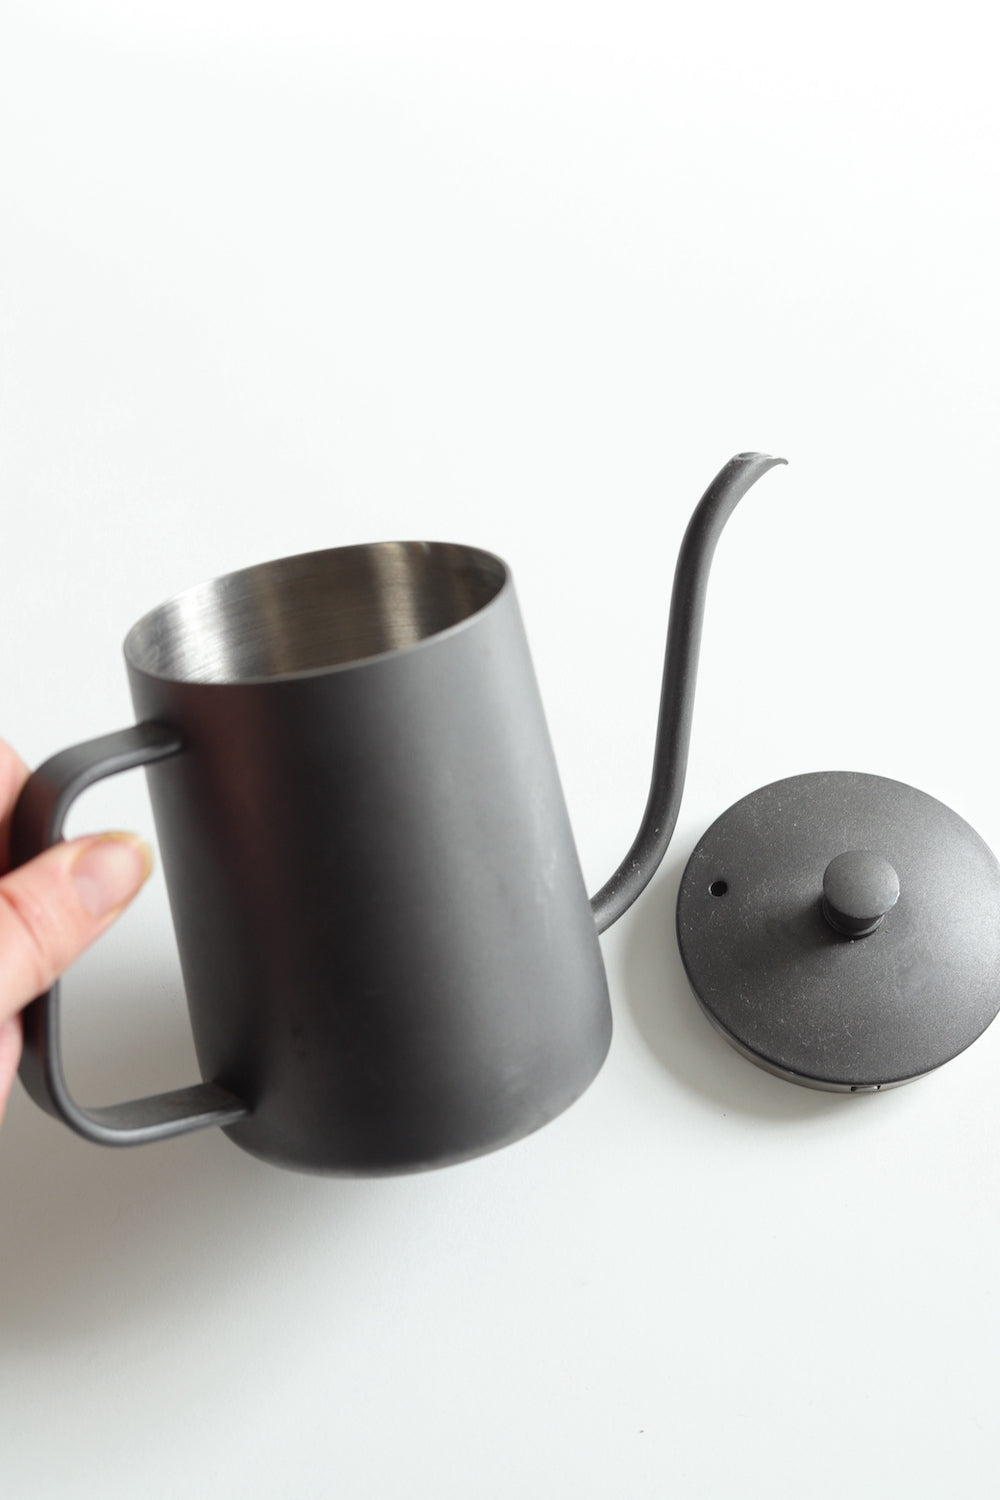 Matte black swan neck coffee or tea pot